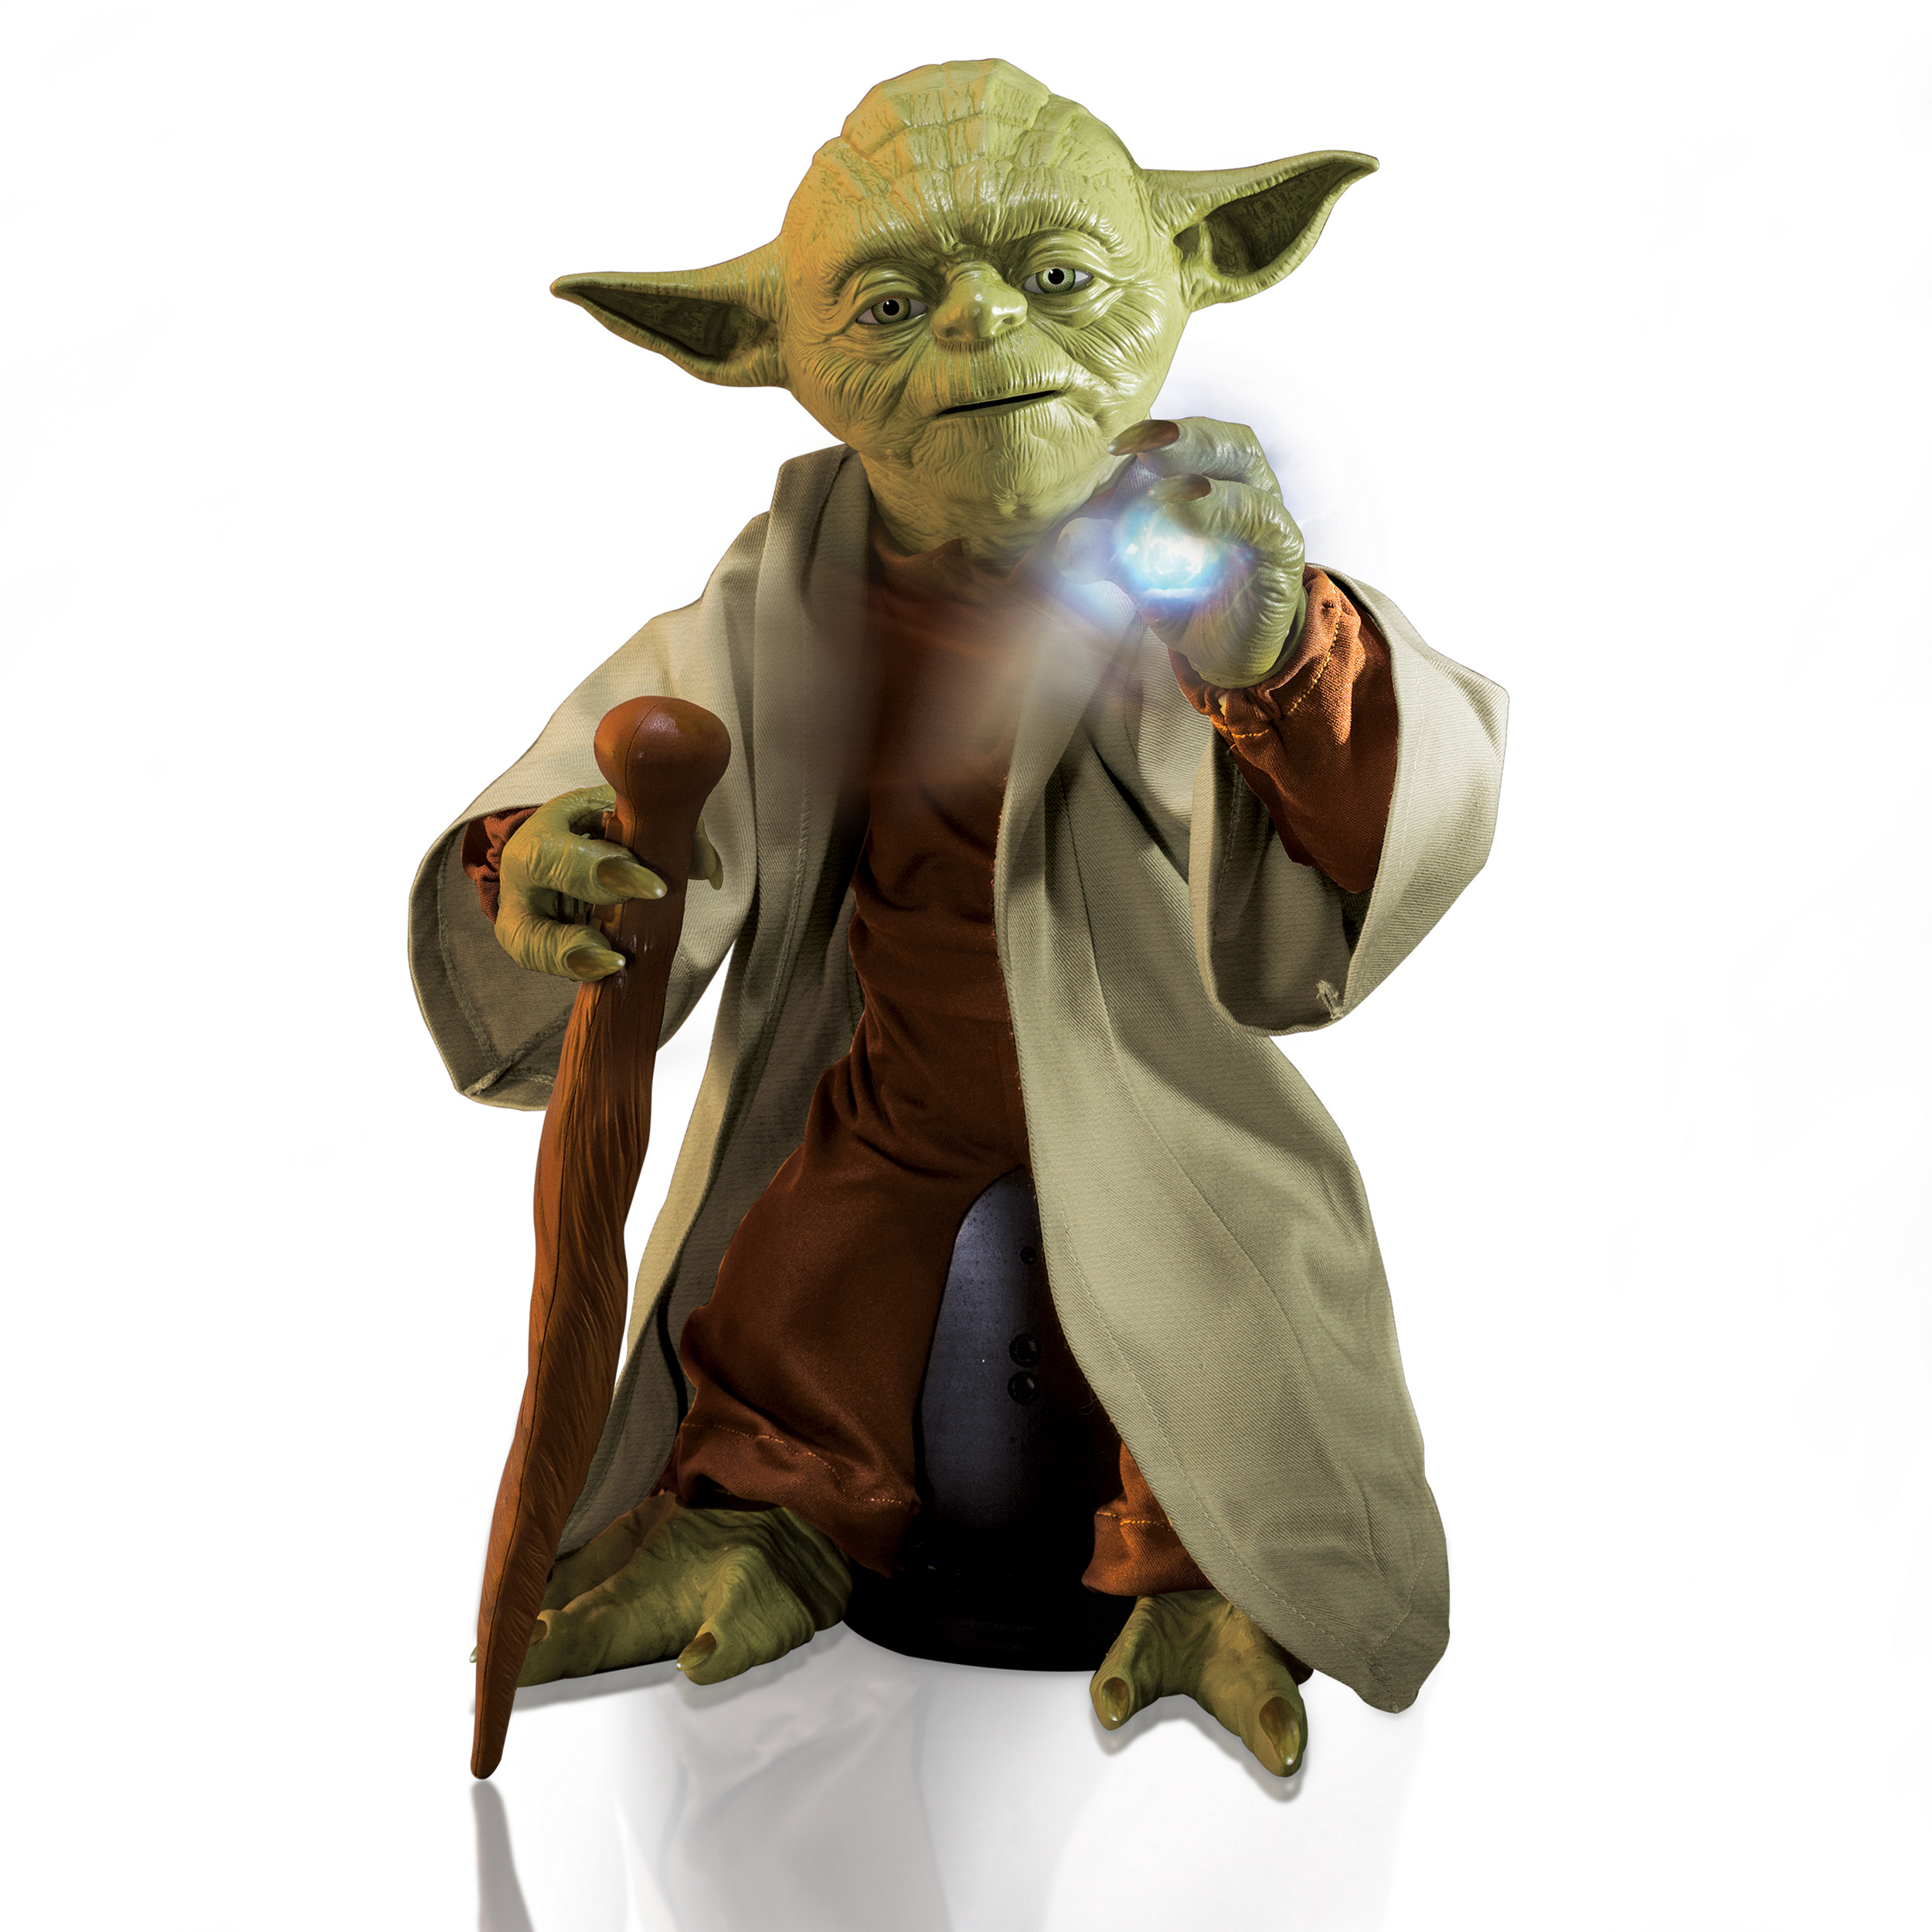 Star Wars Legendary Jedi Master Yoda - image 3 of 6